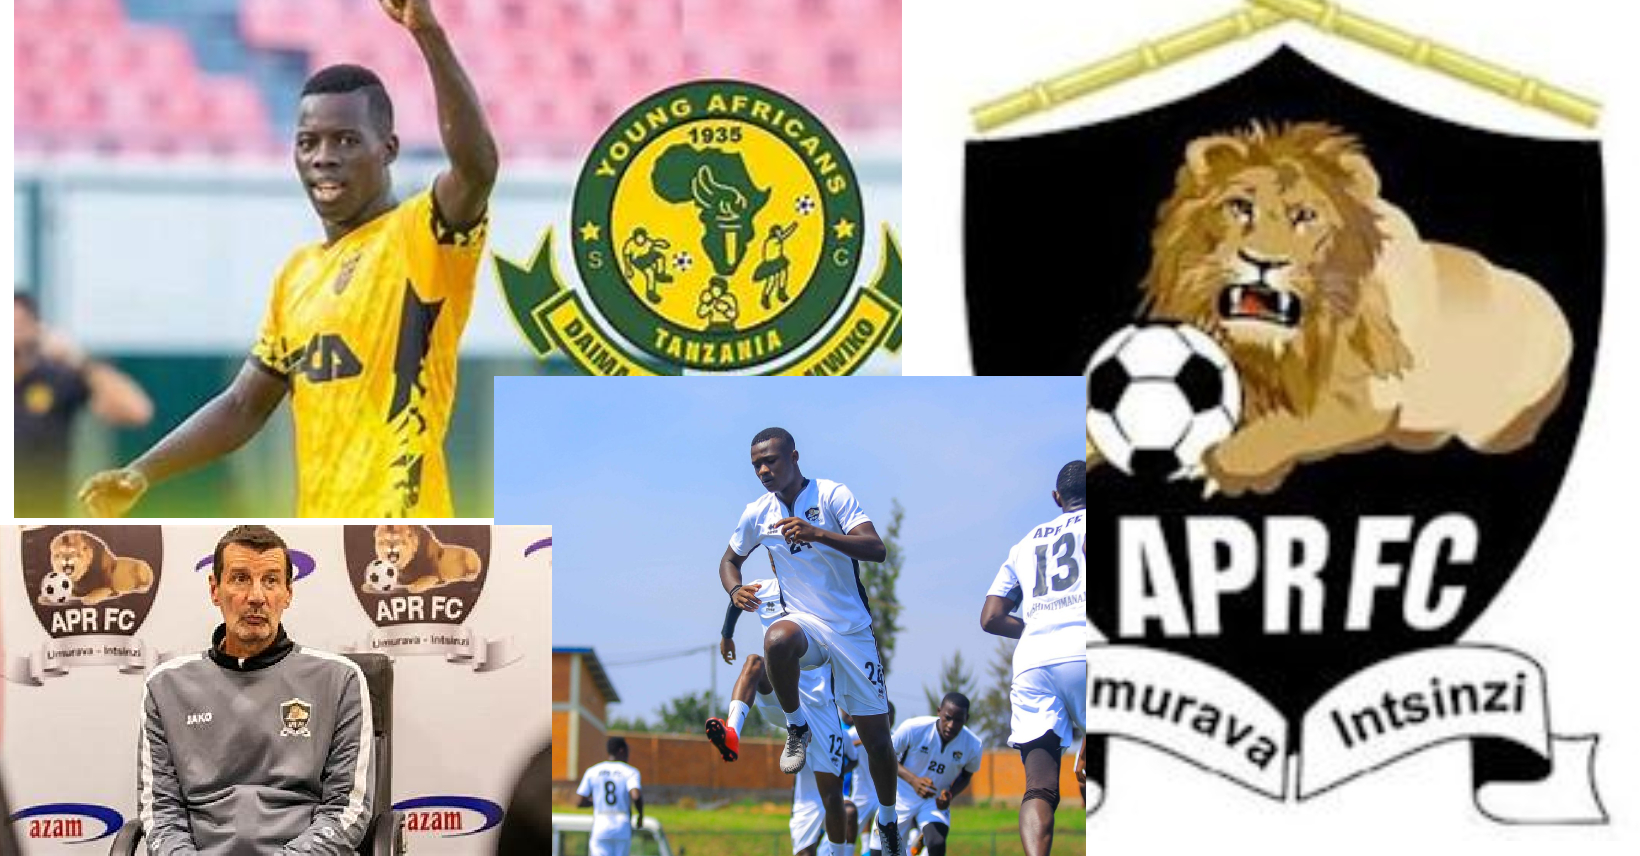 Umunya-Burkina Faso Stéphane Aziz Ki ukinira Young Africans muri Tanzania ashobra kwisanga muri APR FC